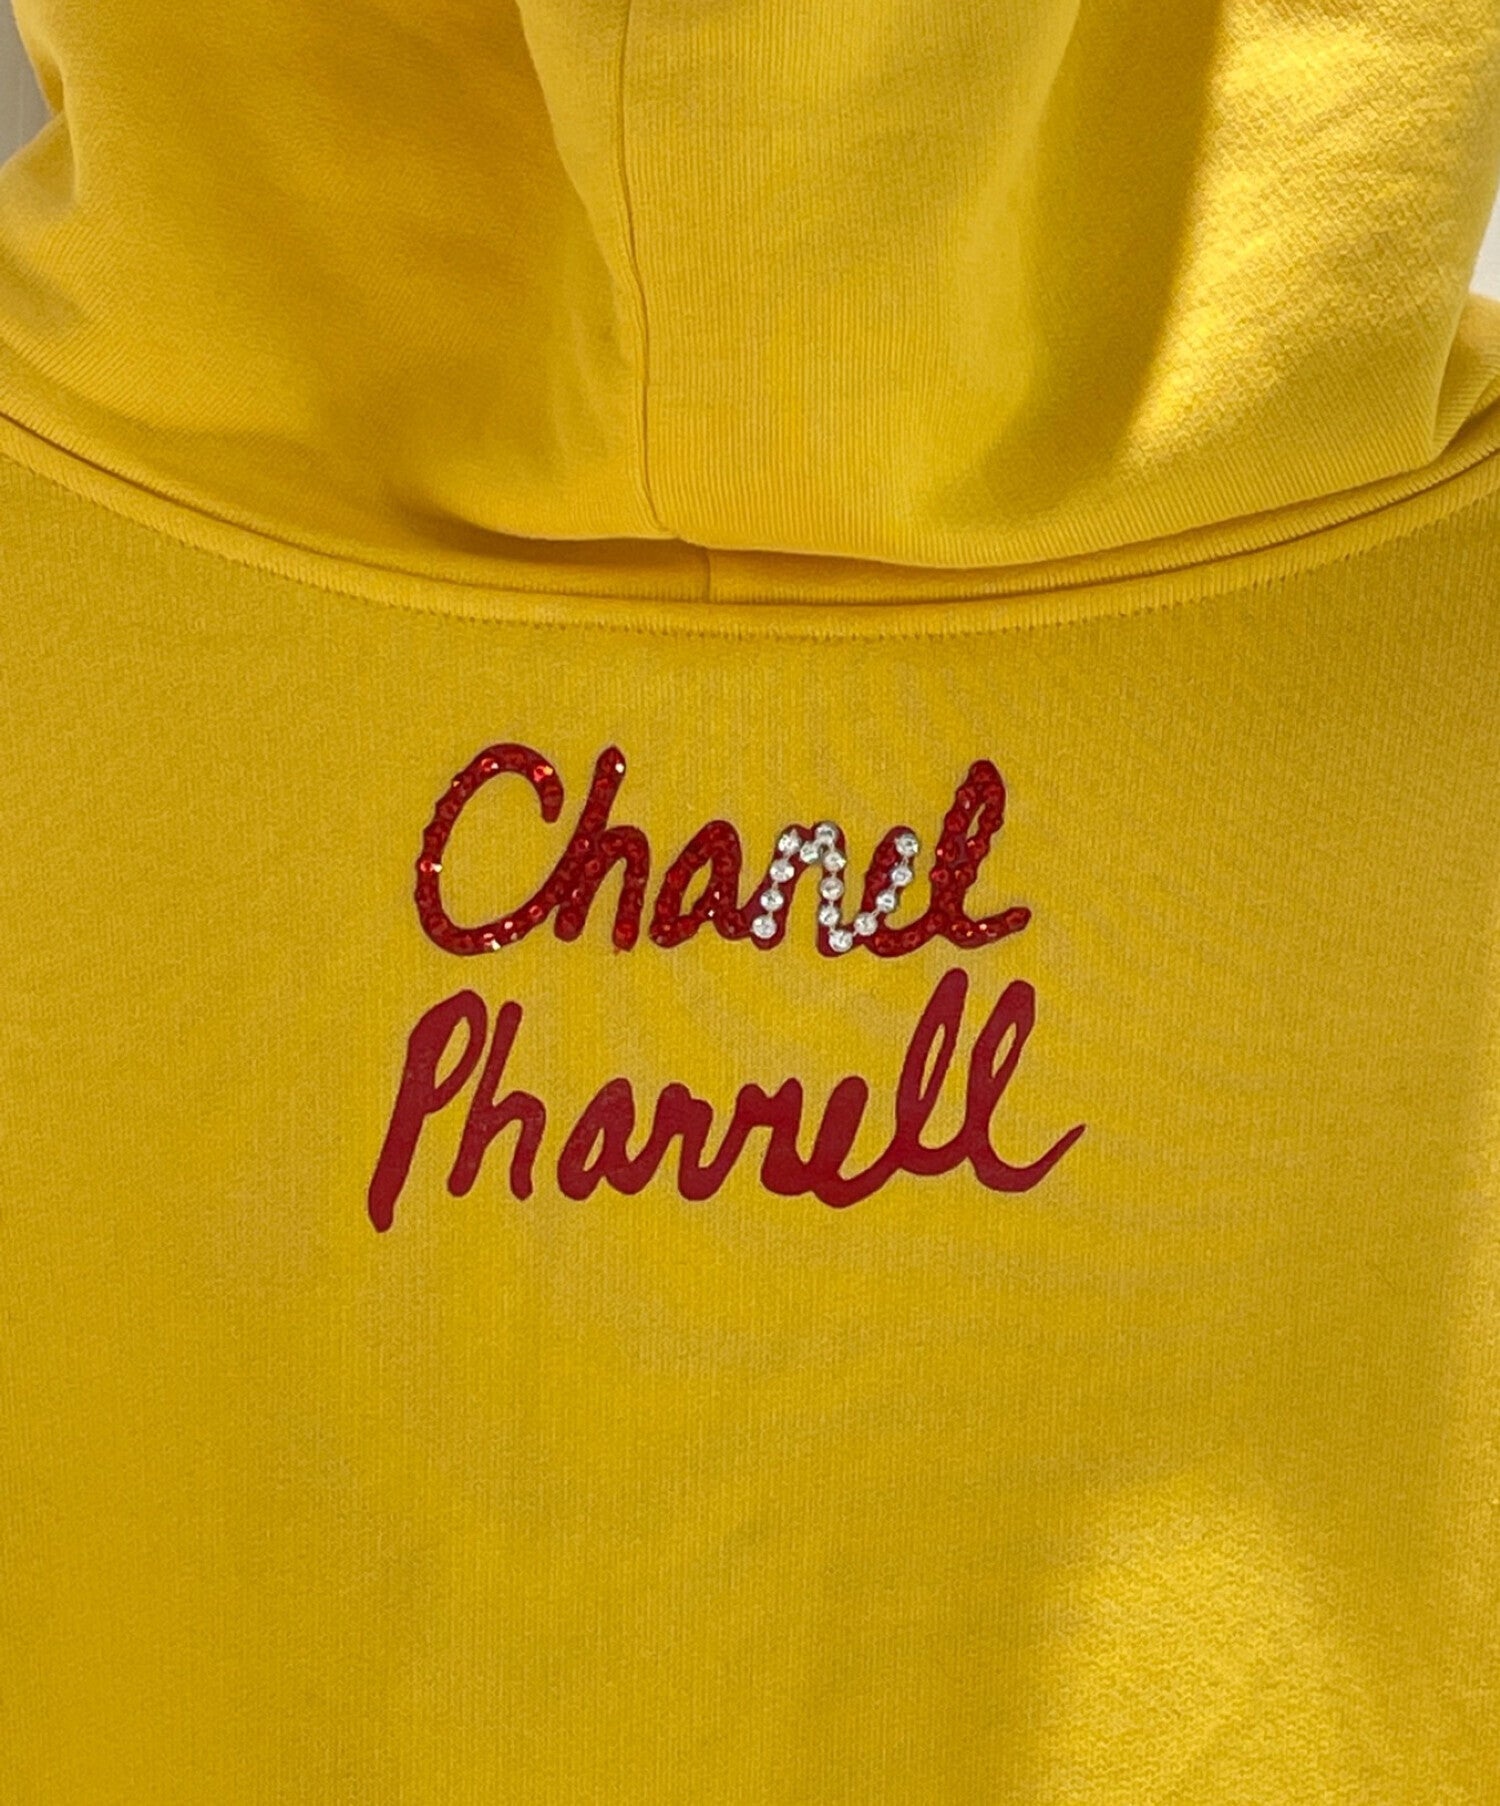 Chanel Pharrell Williams Hoodie